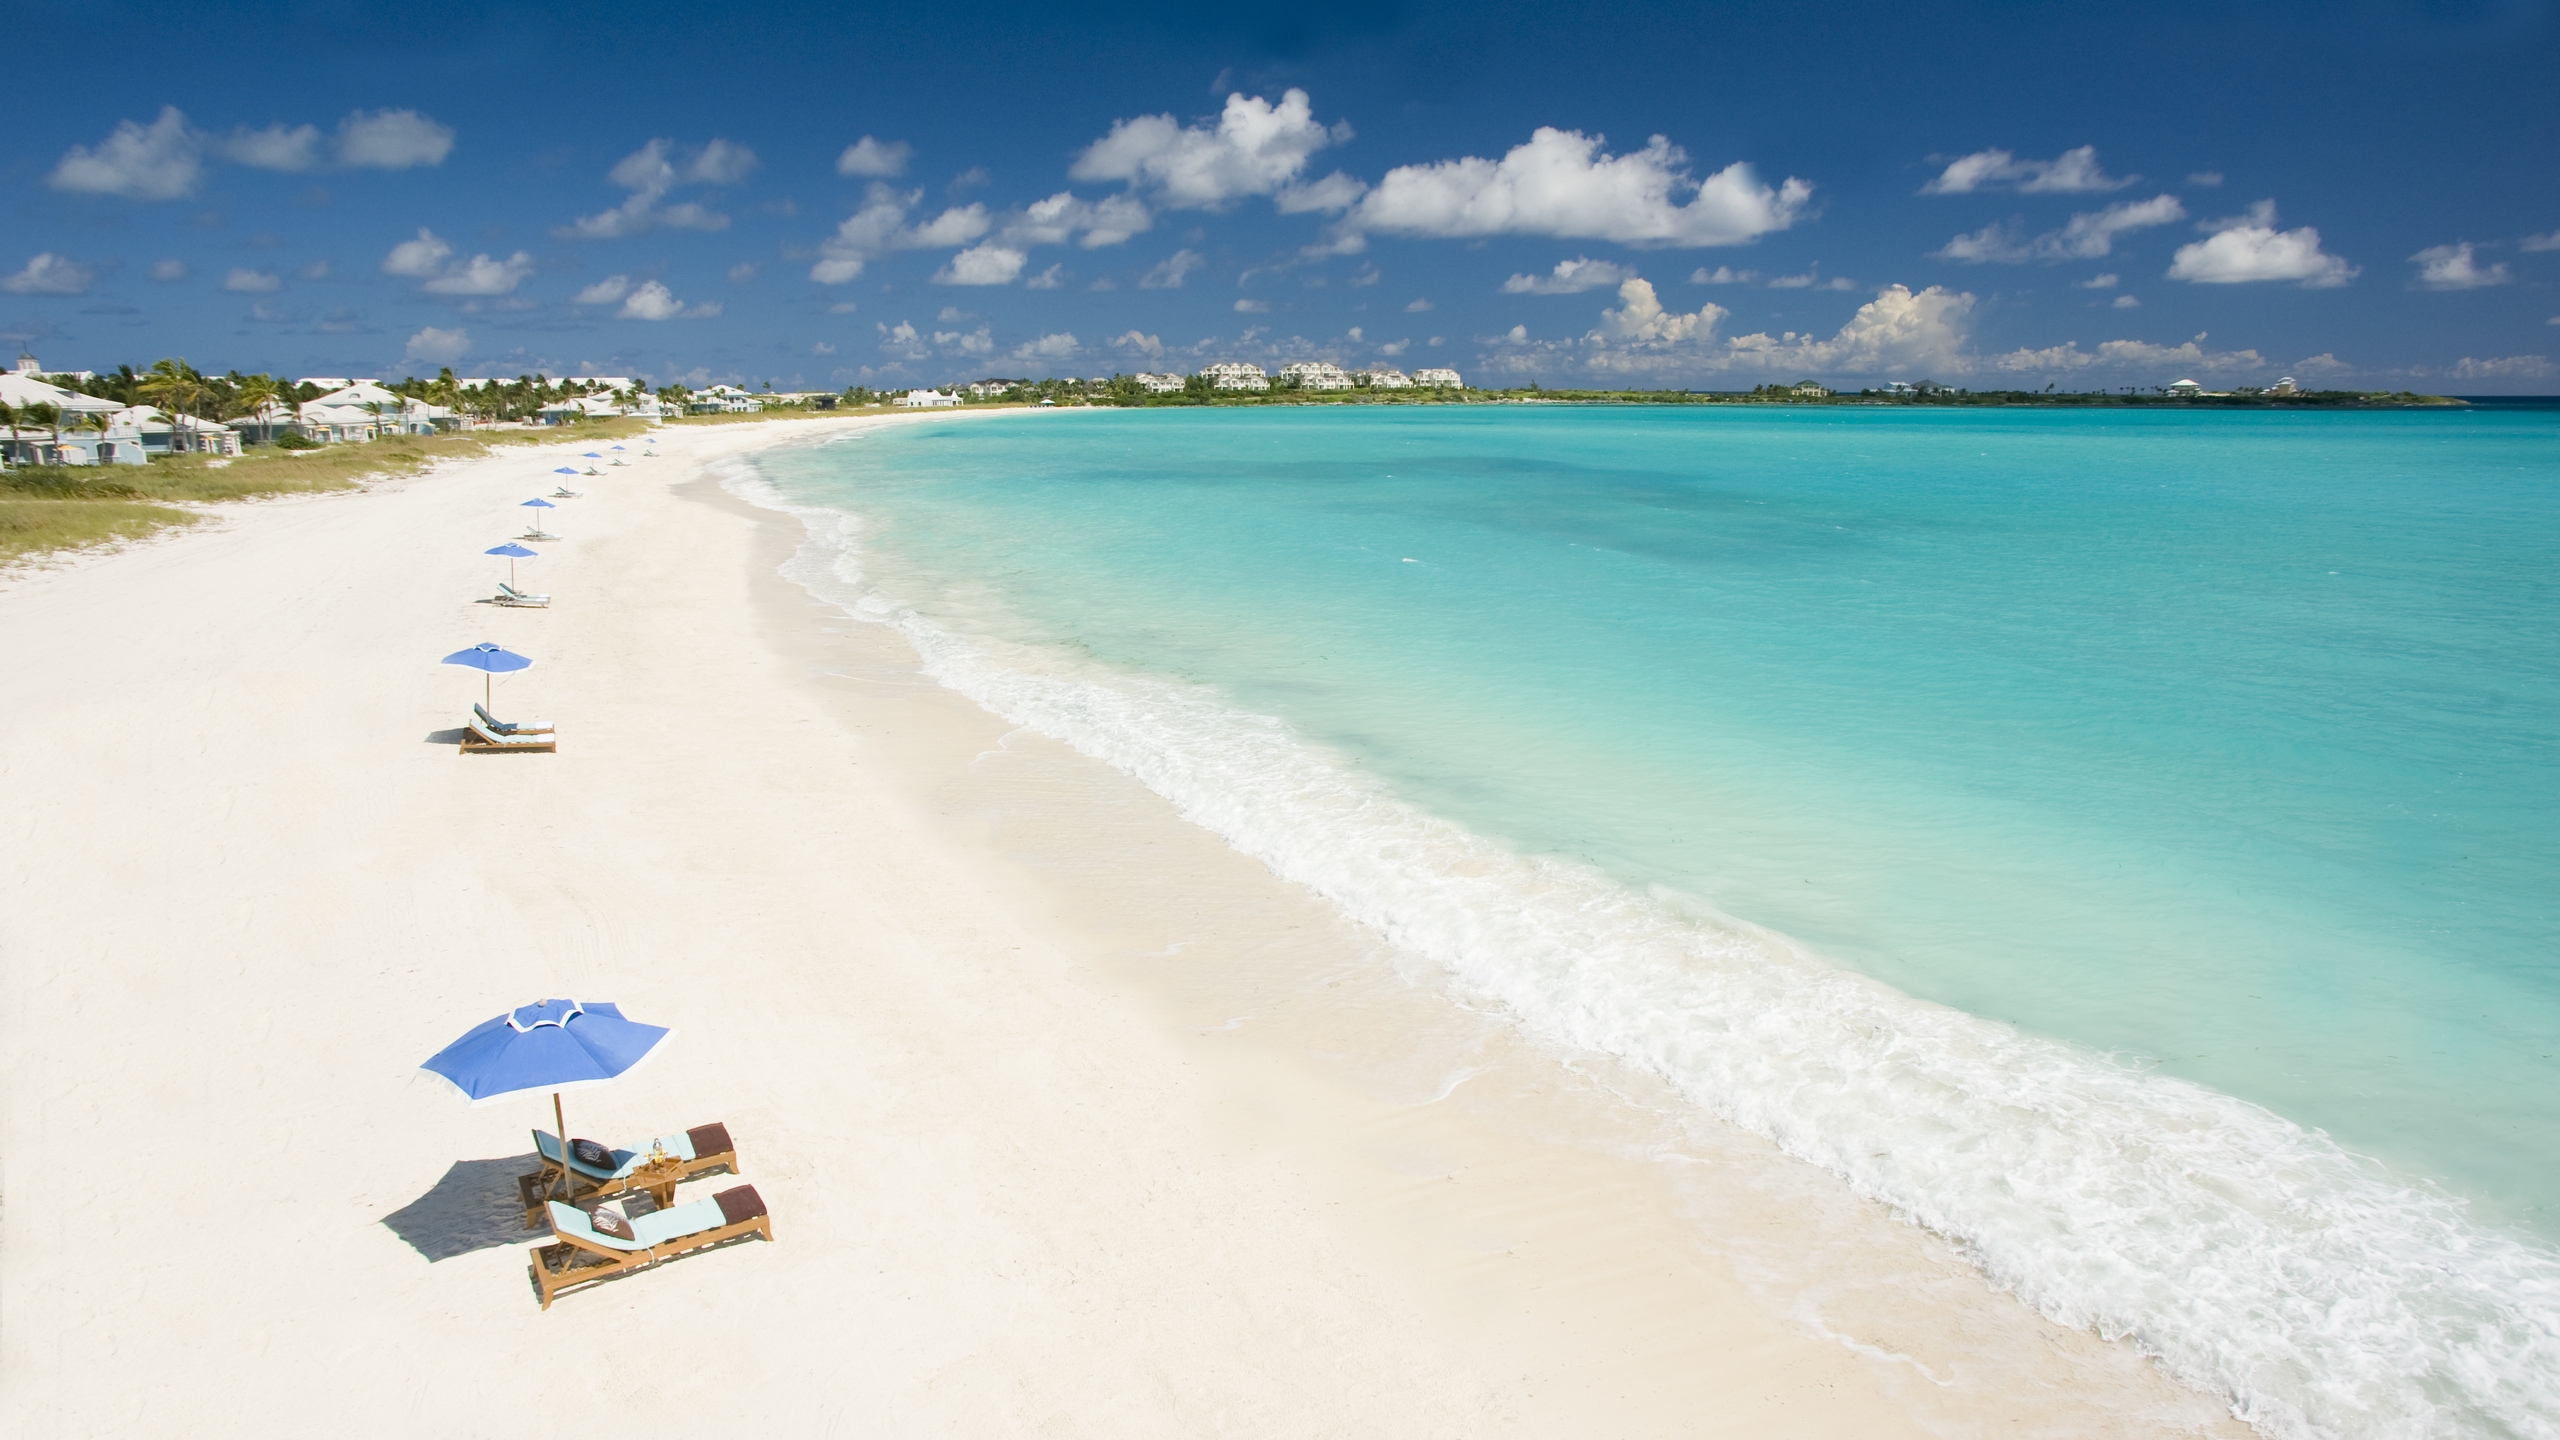 Caribbean Beach for 2560x1440 HDTV resolution